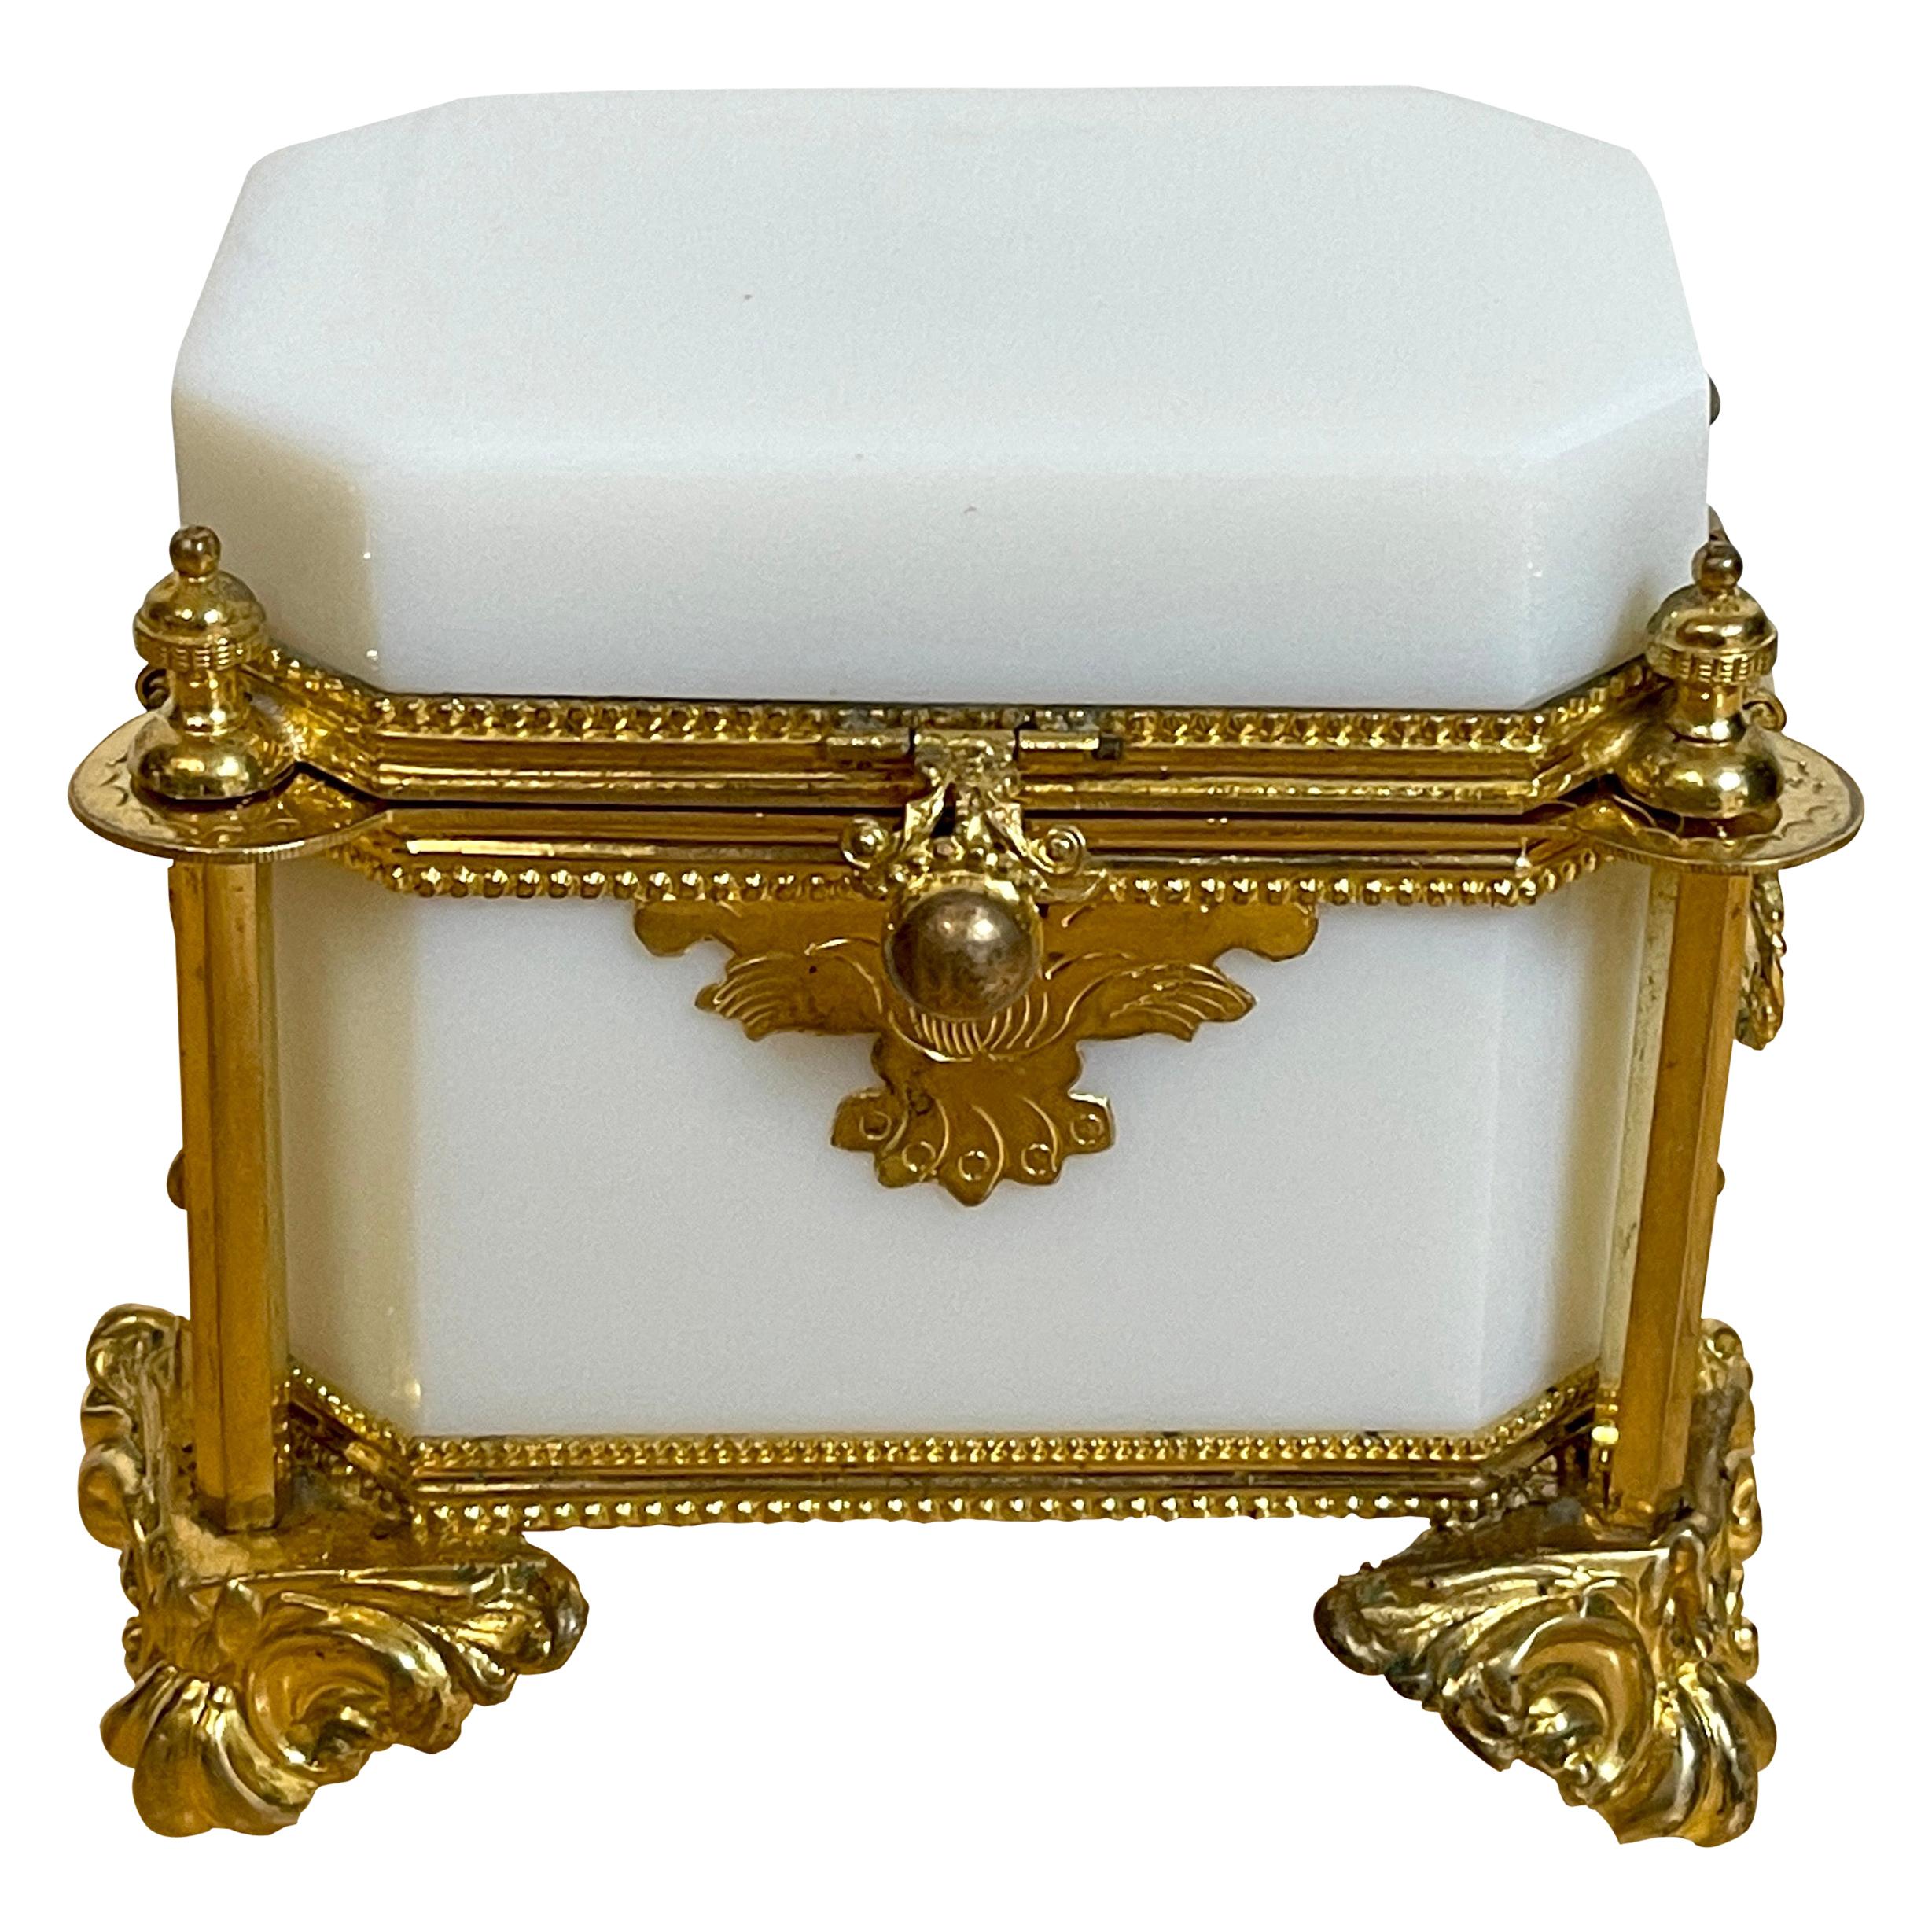 Exquisite French Ormolu Mounted White Opaline Diminutive Box, C 1865